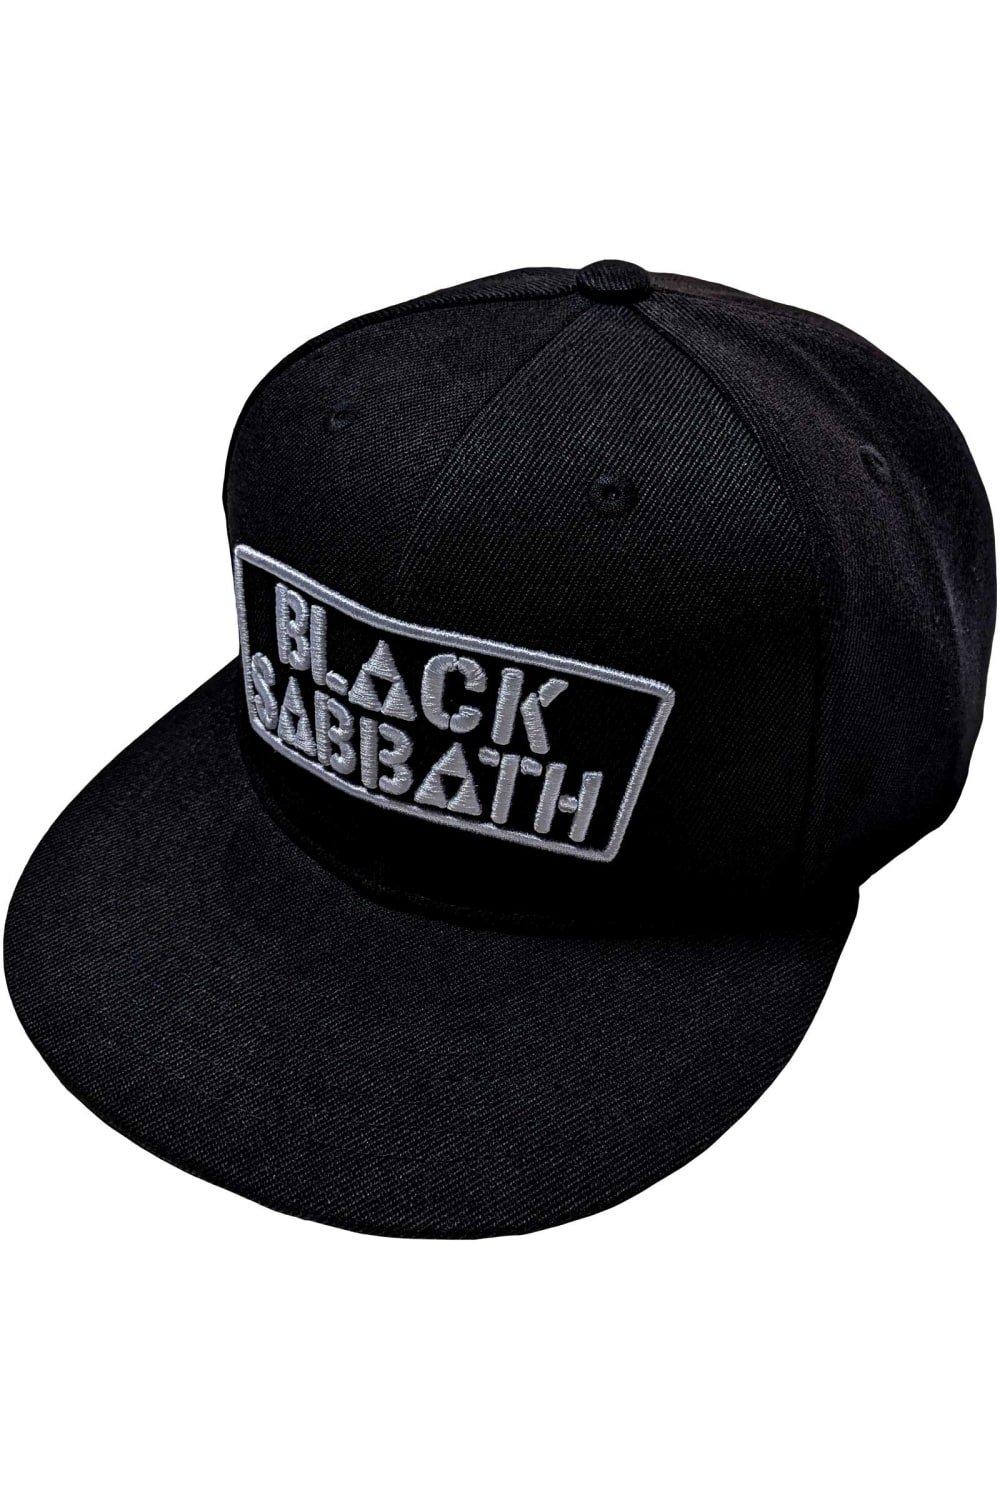 Кепка Snapback Never Say Die Black Sabbath, черный black sabbath never say die lp cd